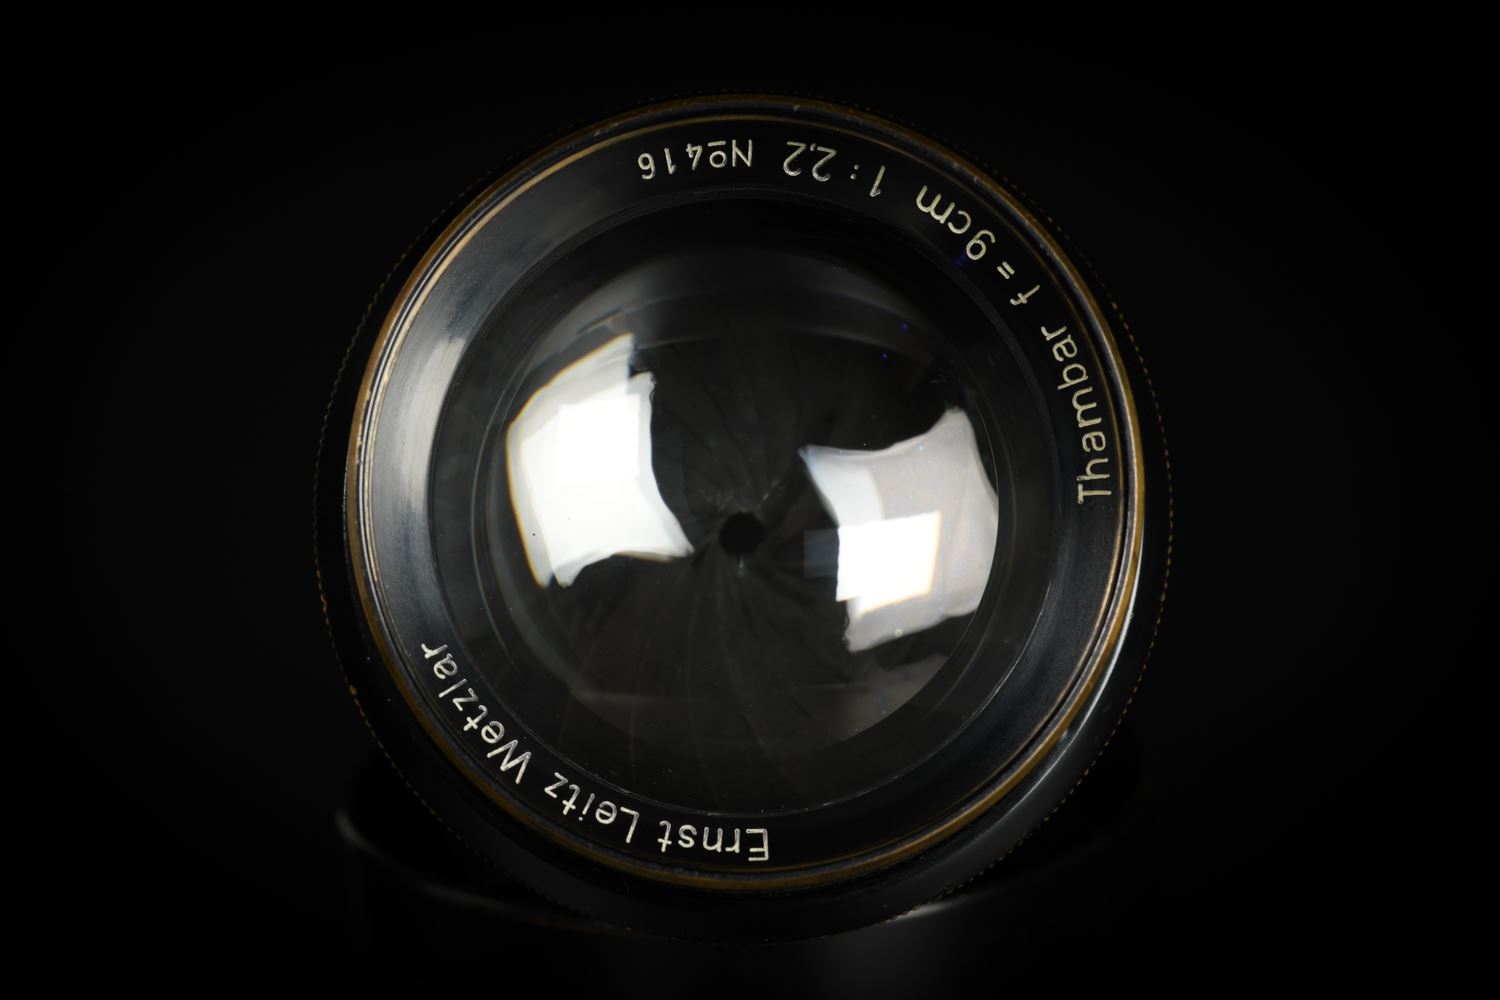 Picture of Leica Thambar 9cm f/2.2 Screw LTM